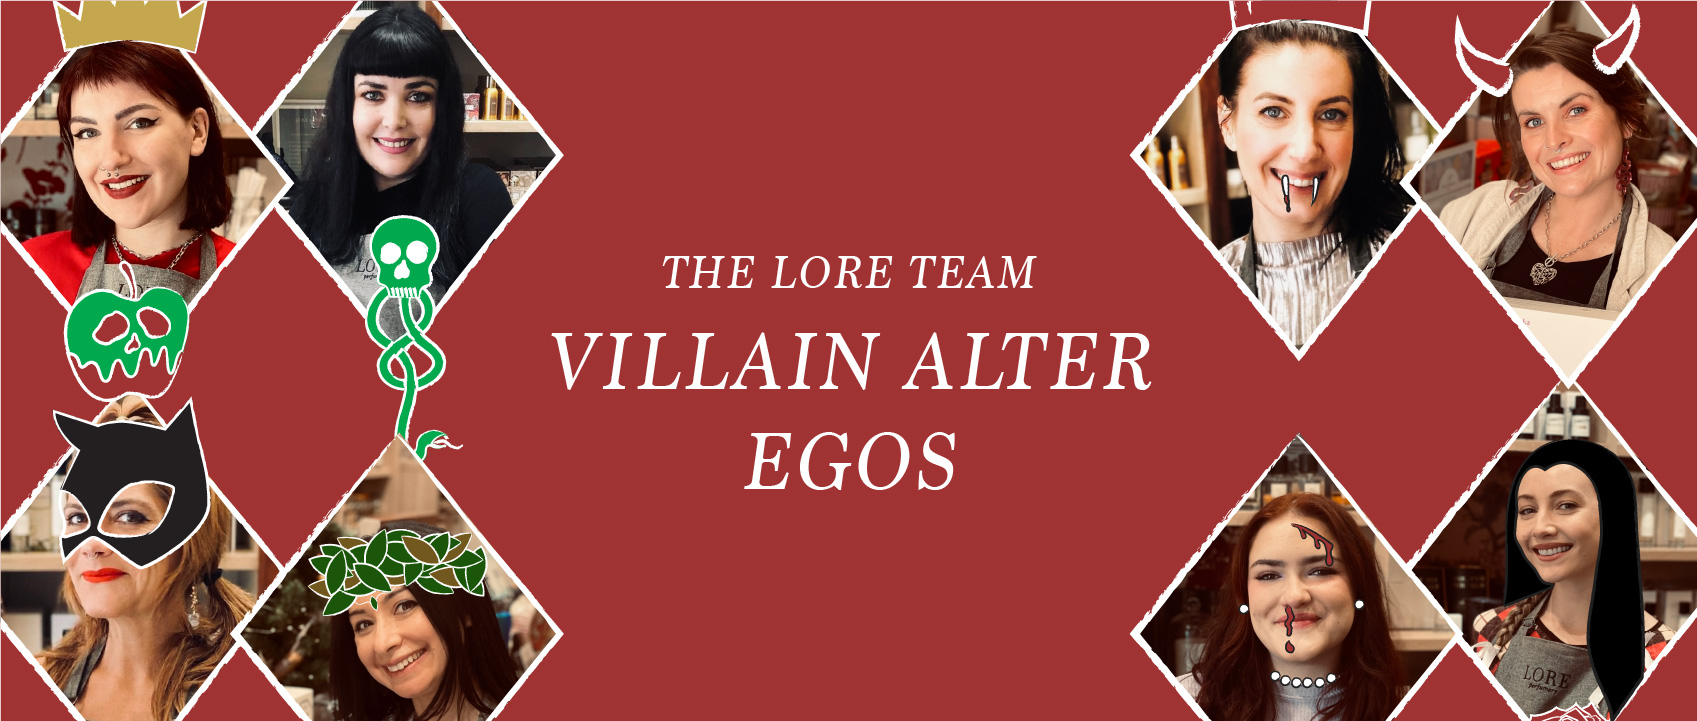 lore team villain alter egos